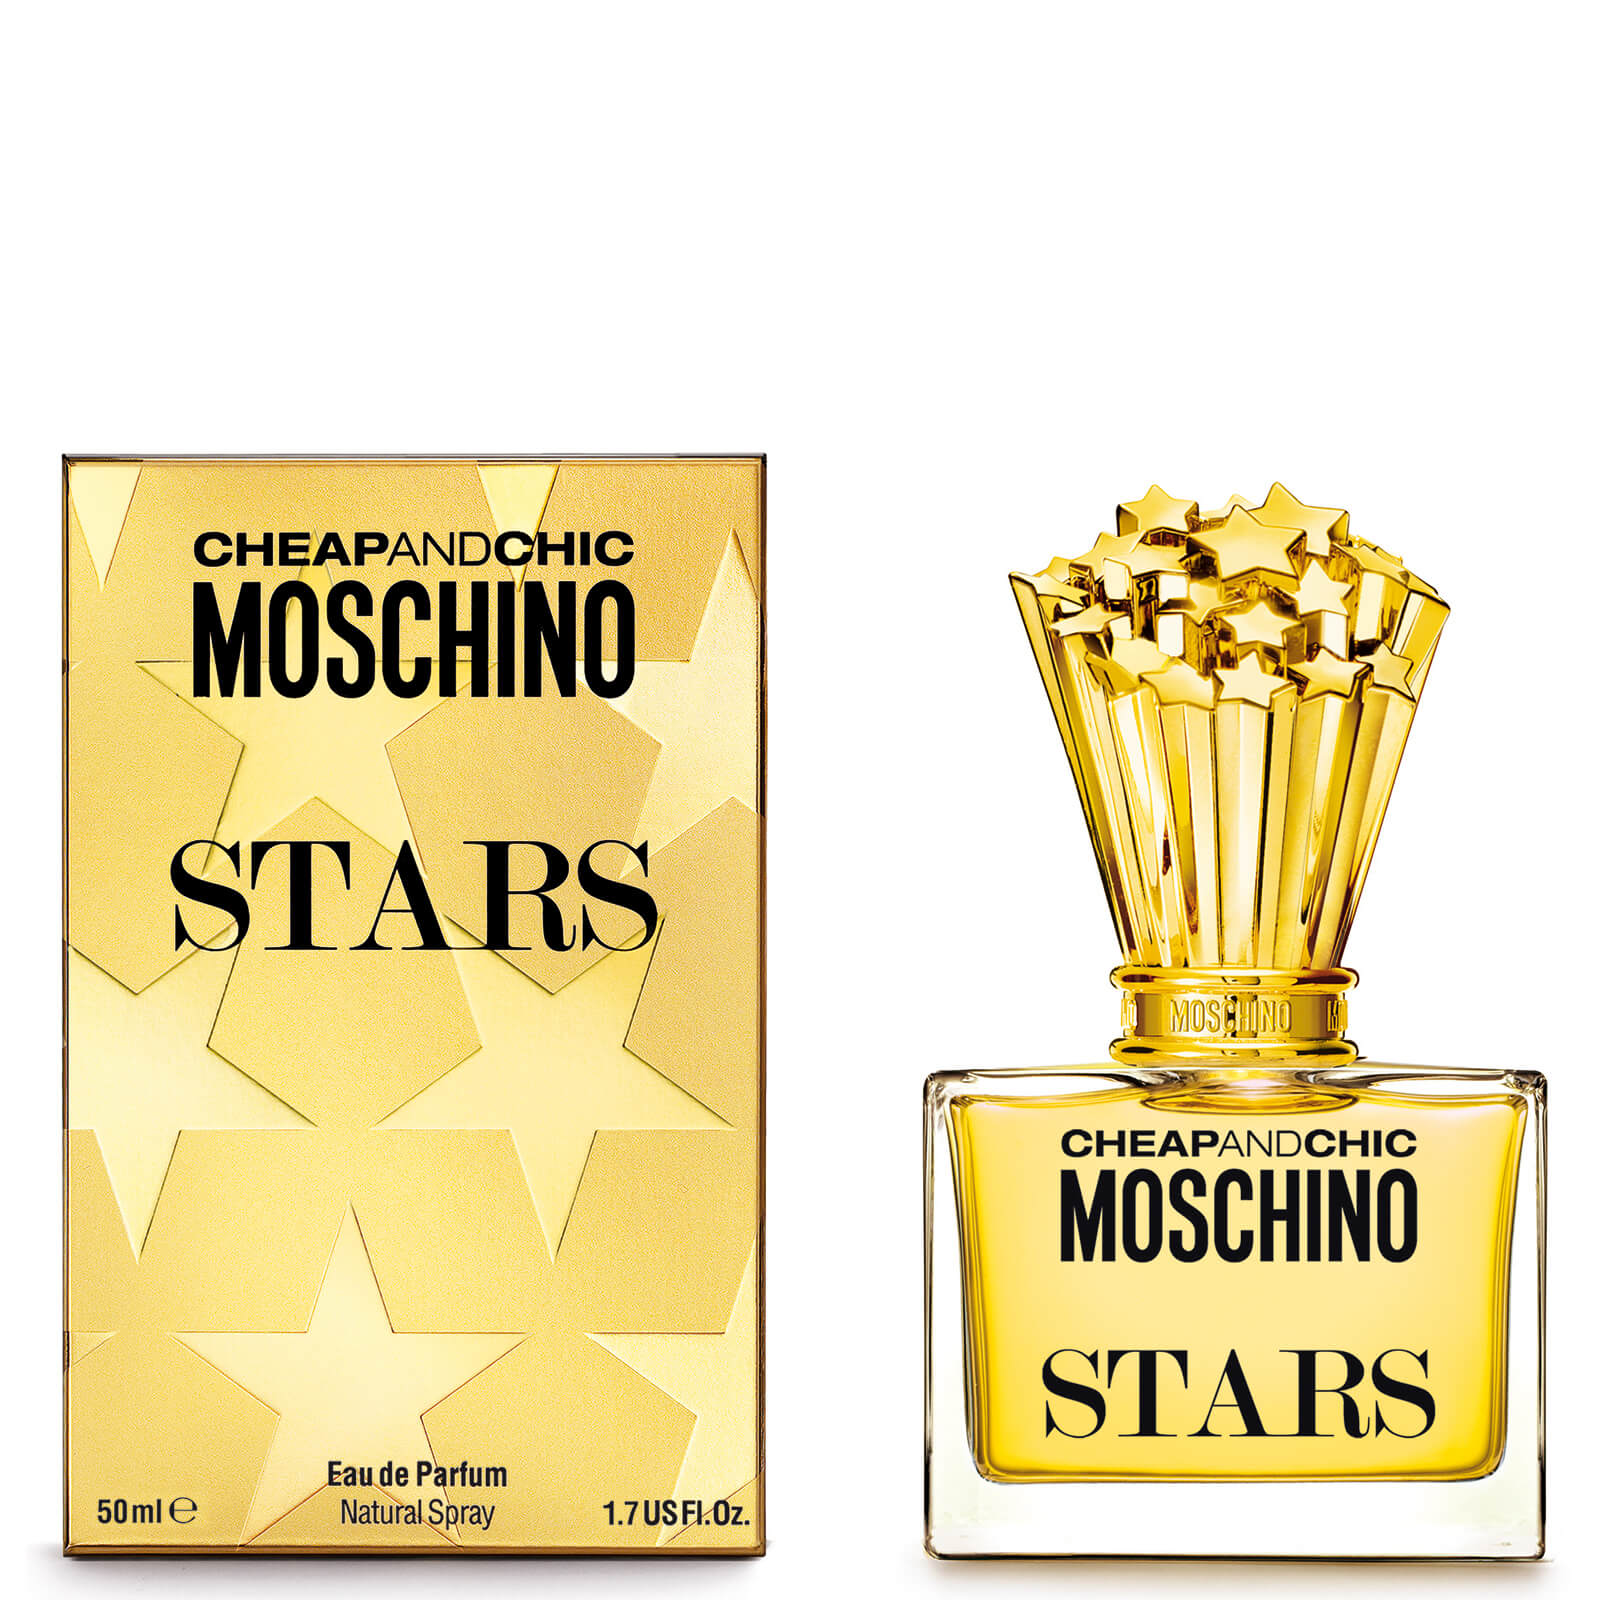 moschino stars review